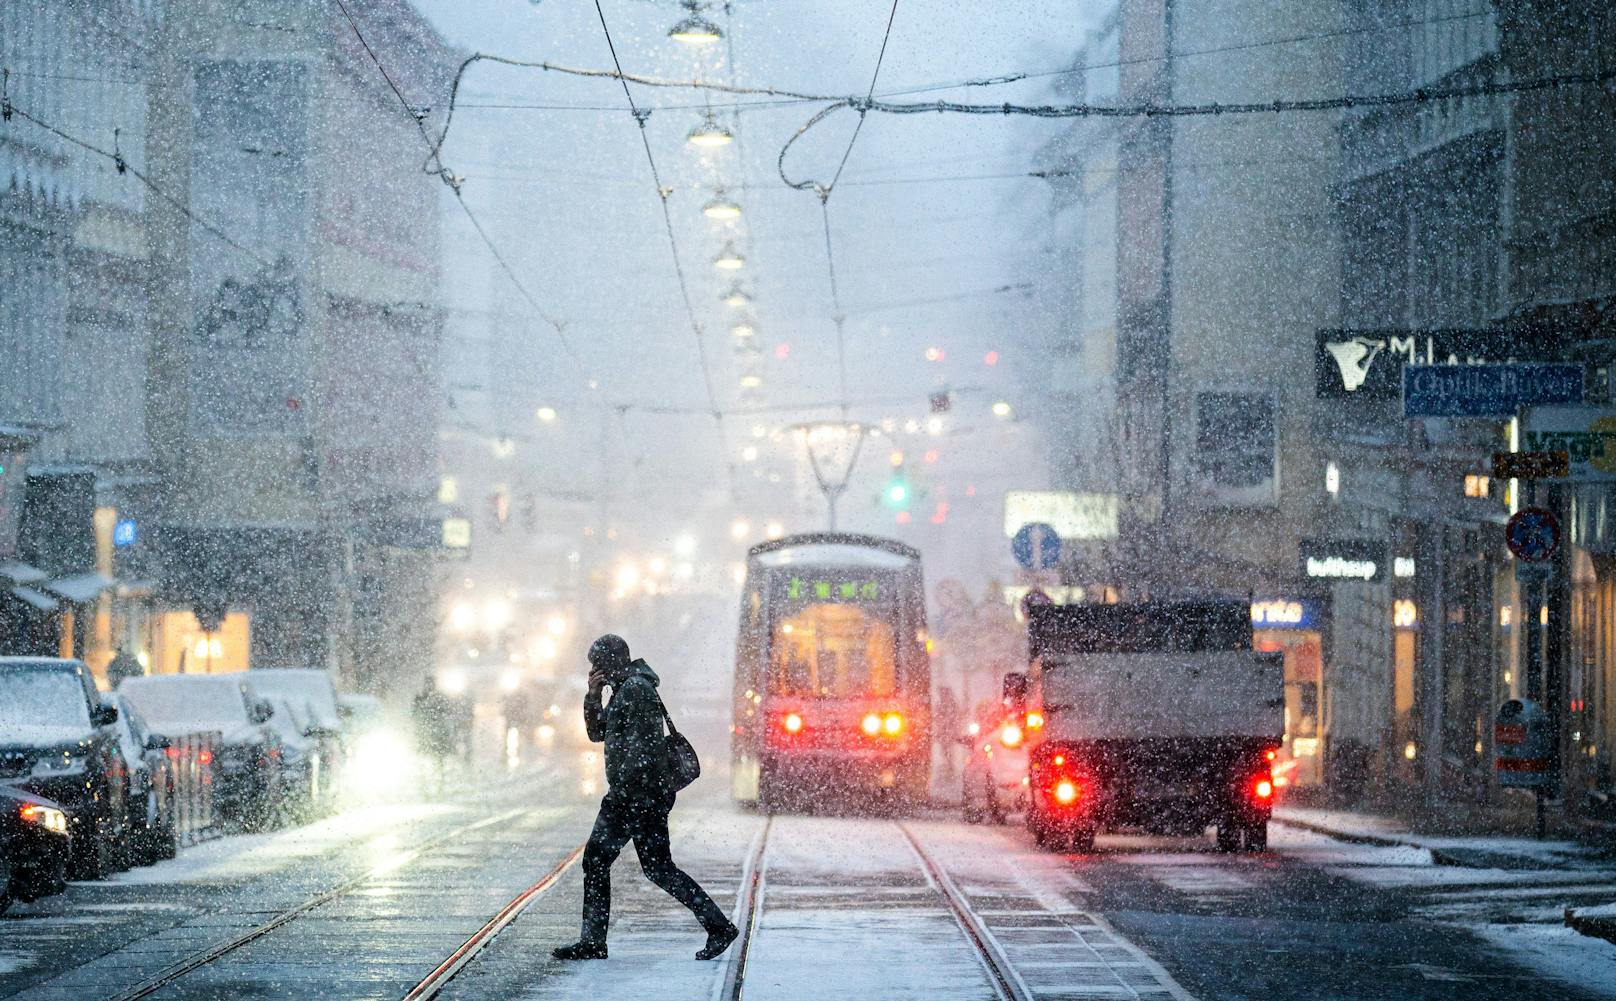 Schneefall in Wien am 11. Februar 2021. Archivbild